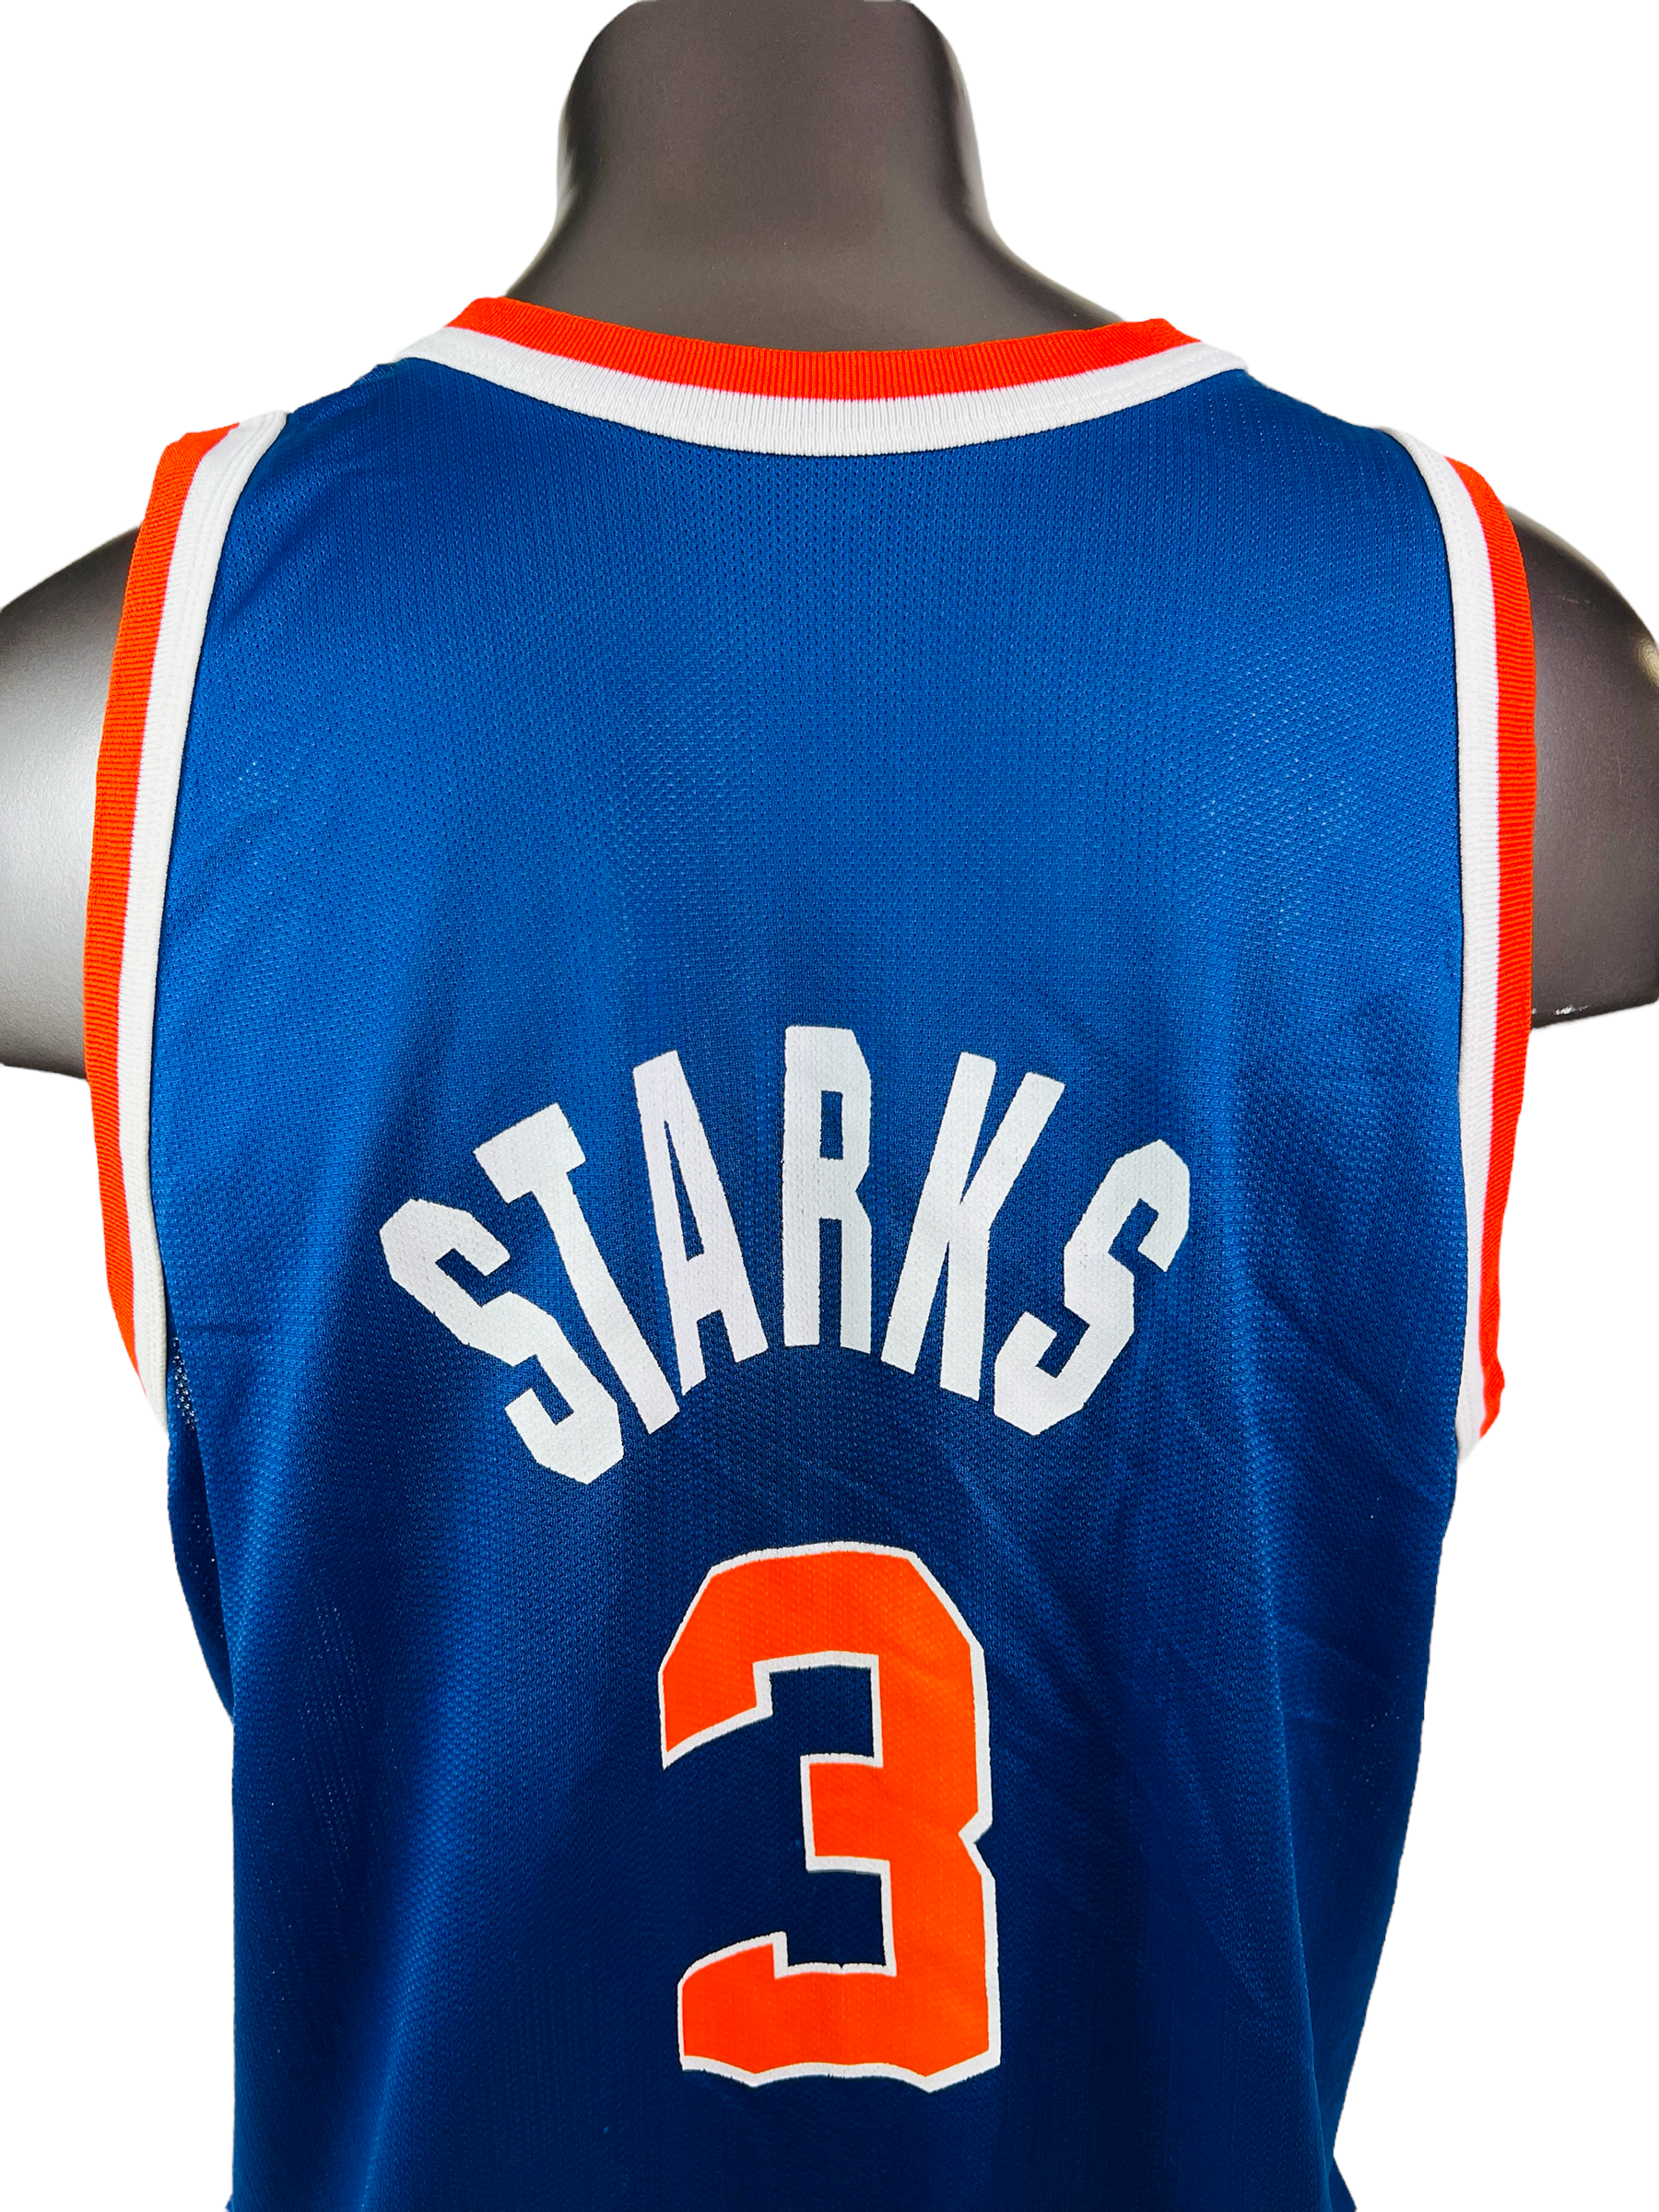 Vintage 90s New York Knicks Champion Authentic John Starks 